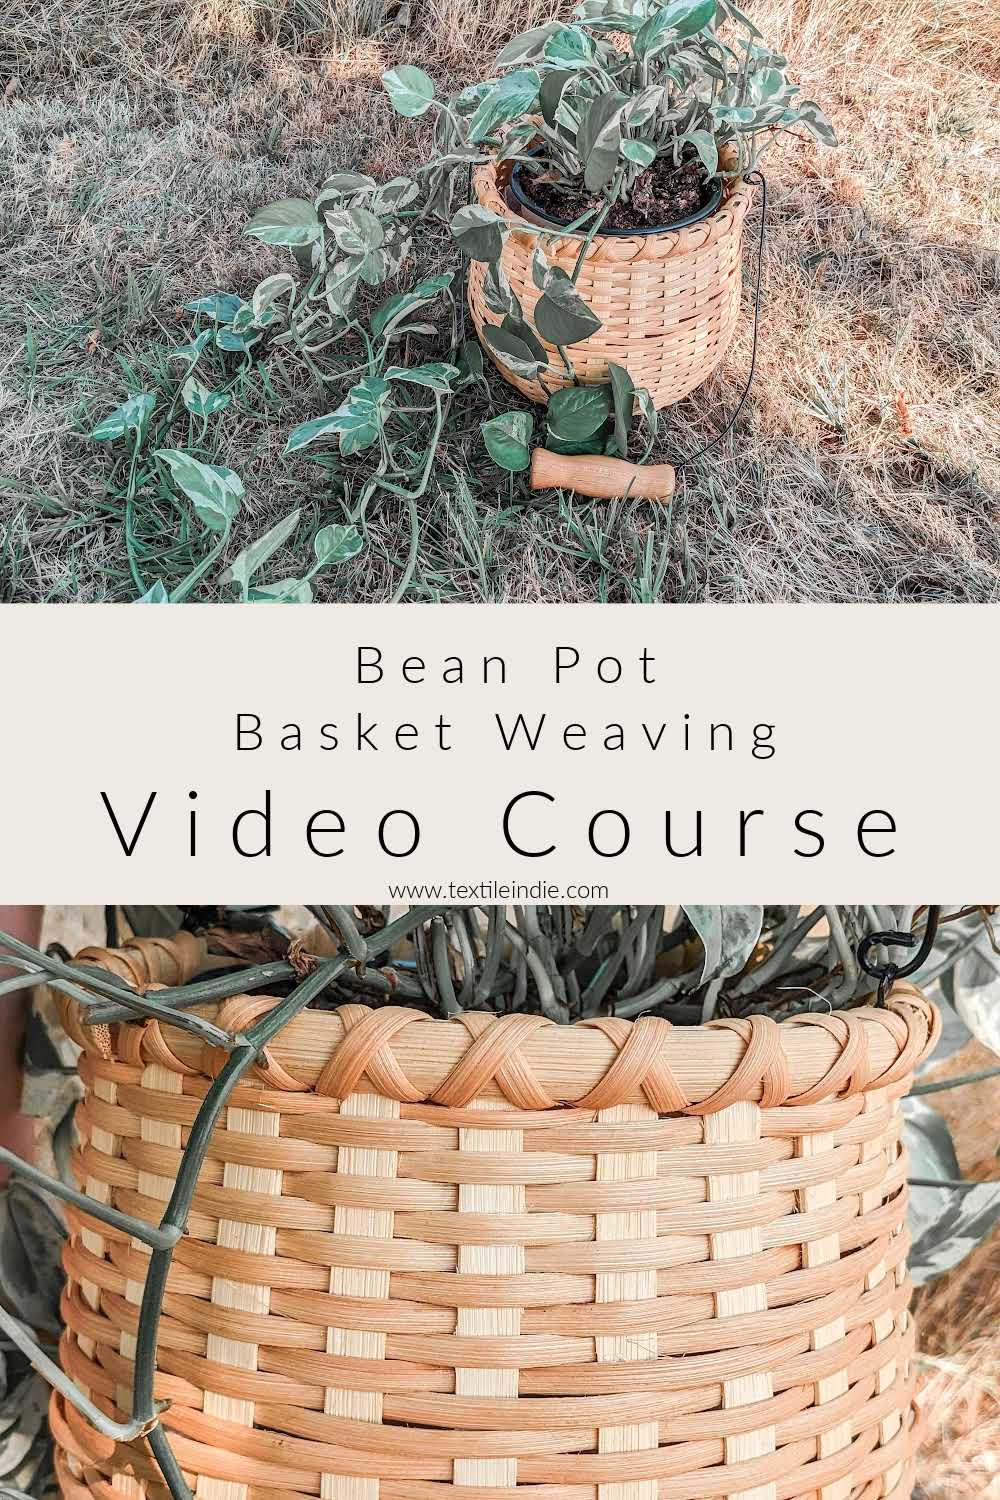 Online Basket Weaving Classes